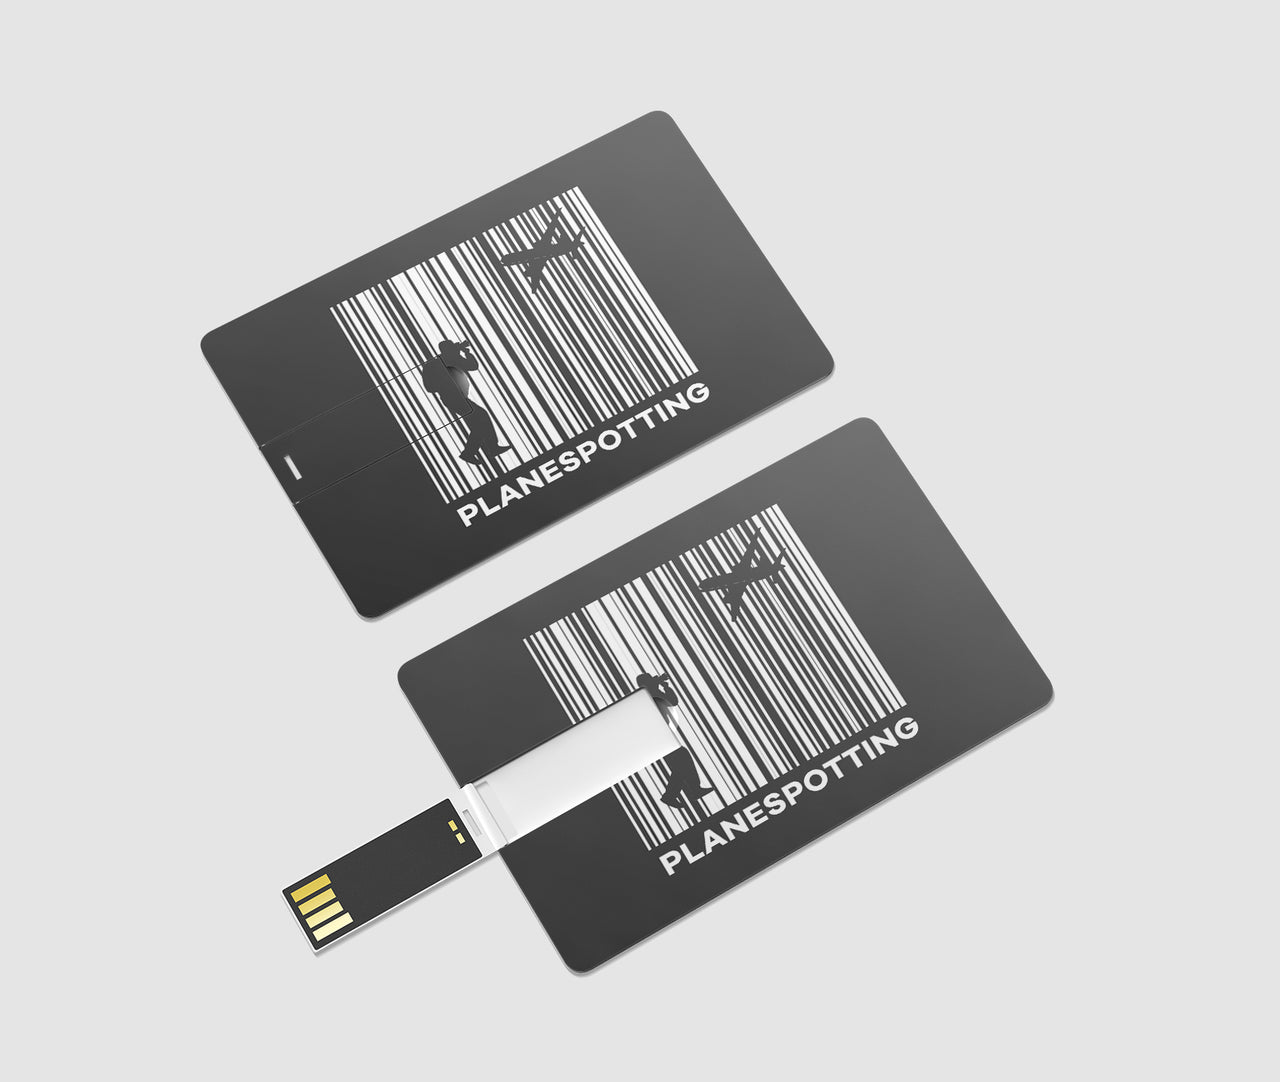 Planespotting Designed USB Cards